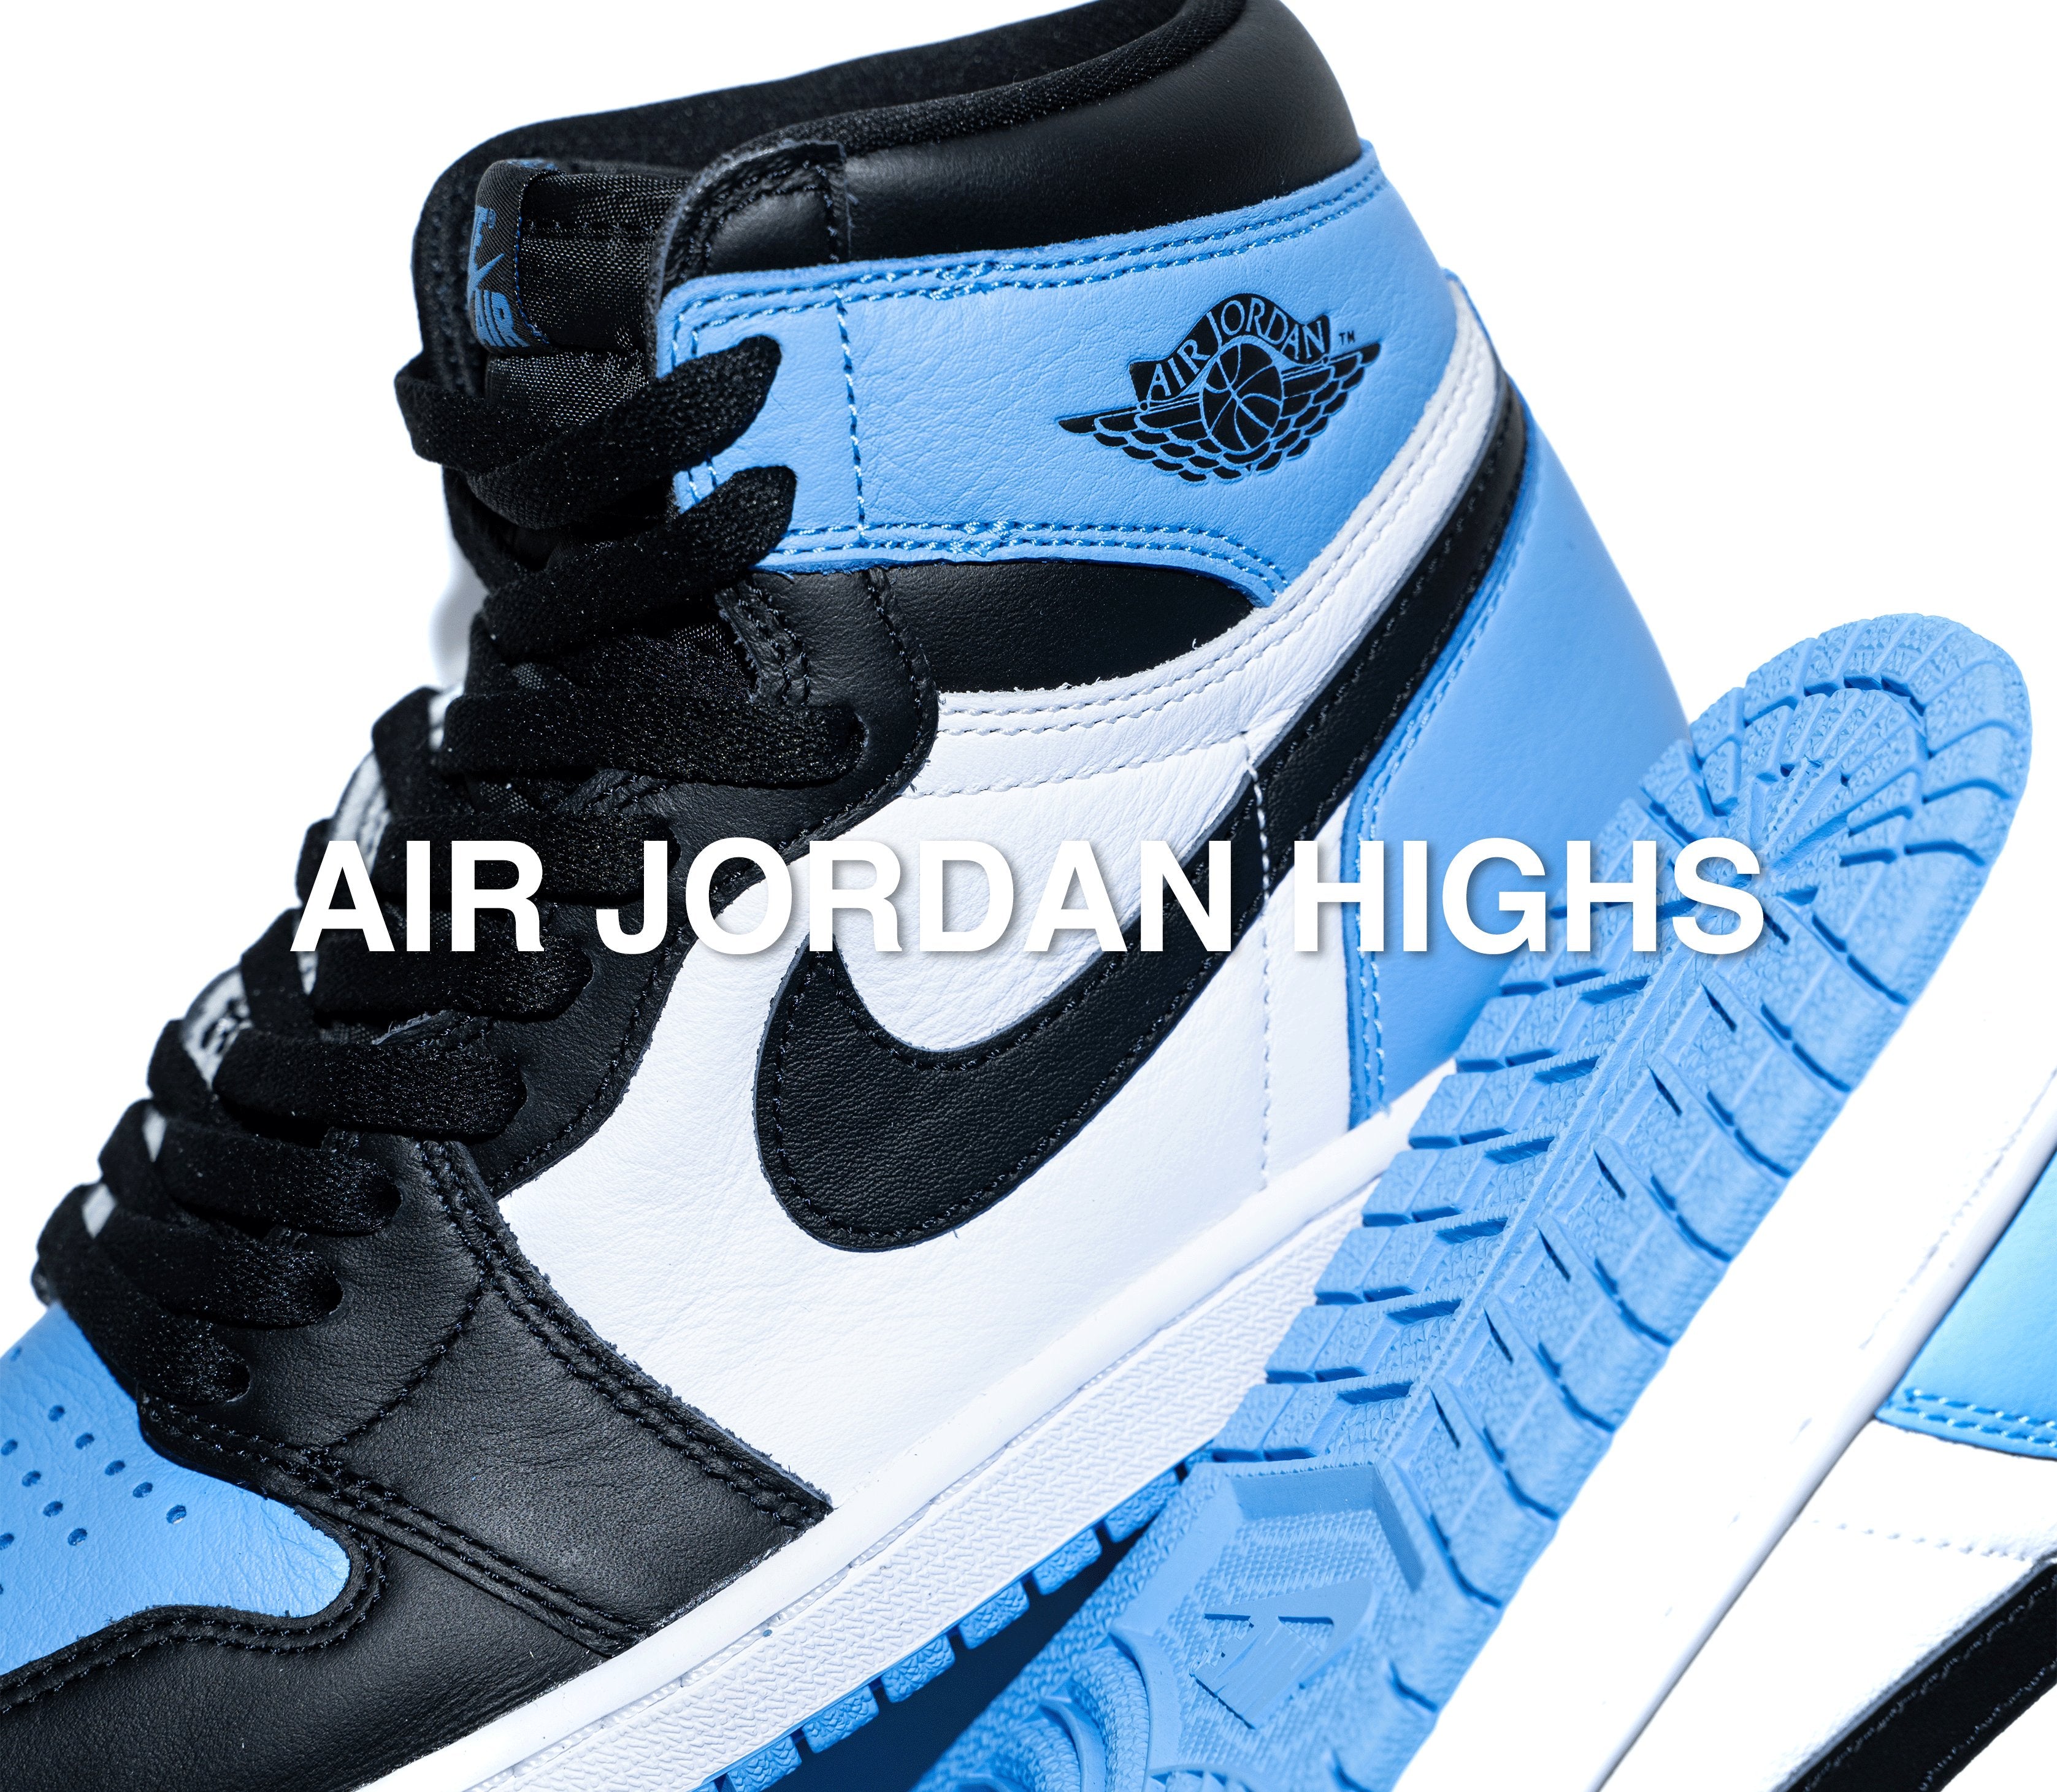 Air Jordan Highs